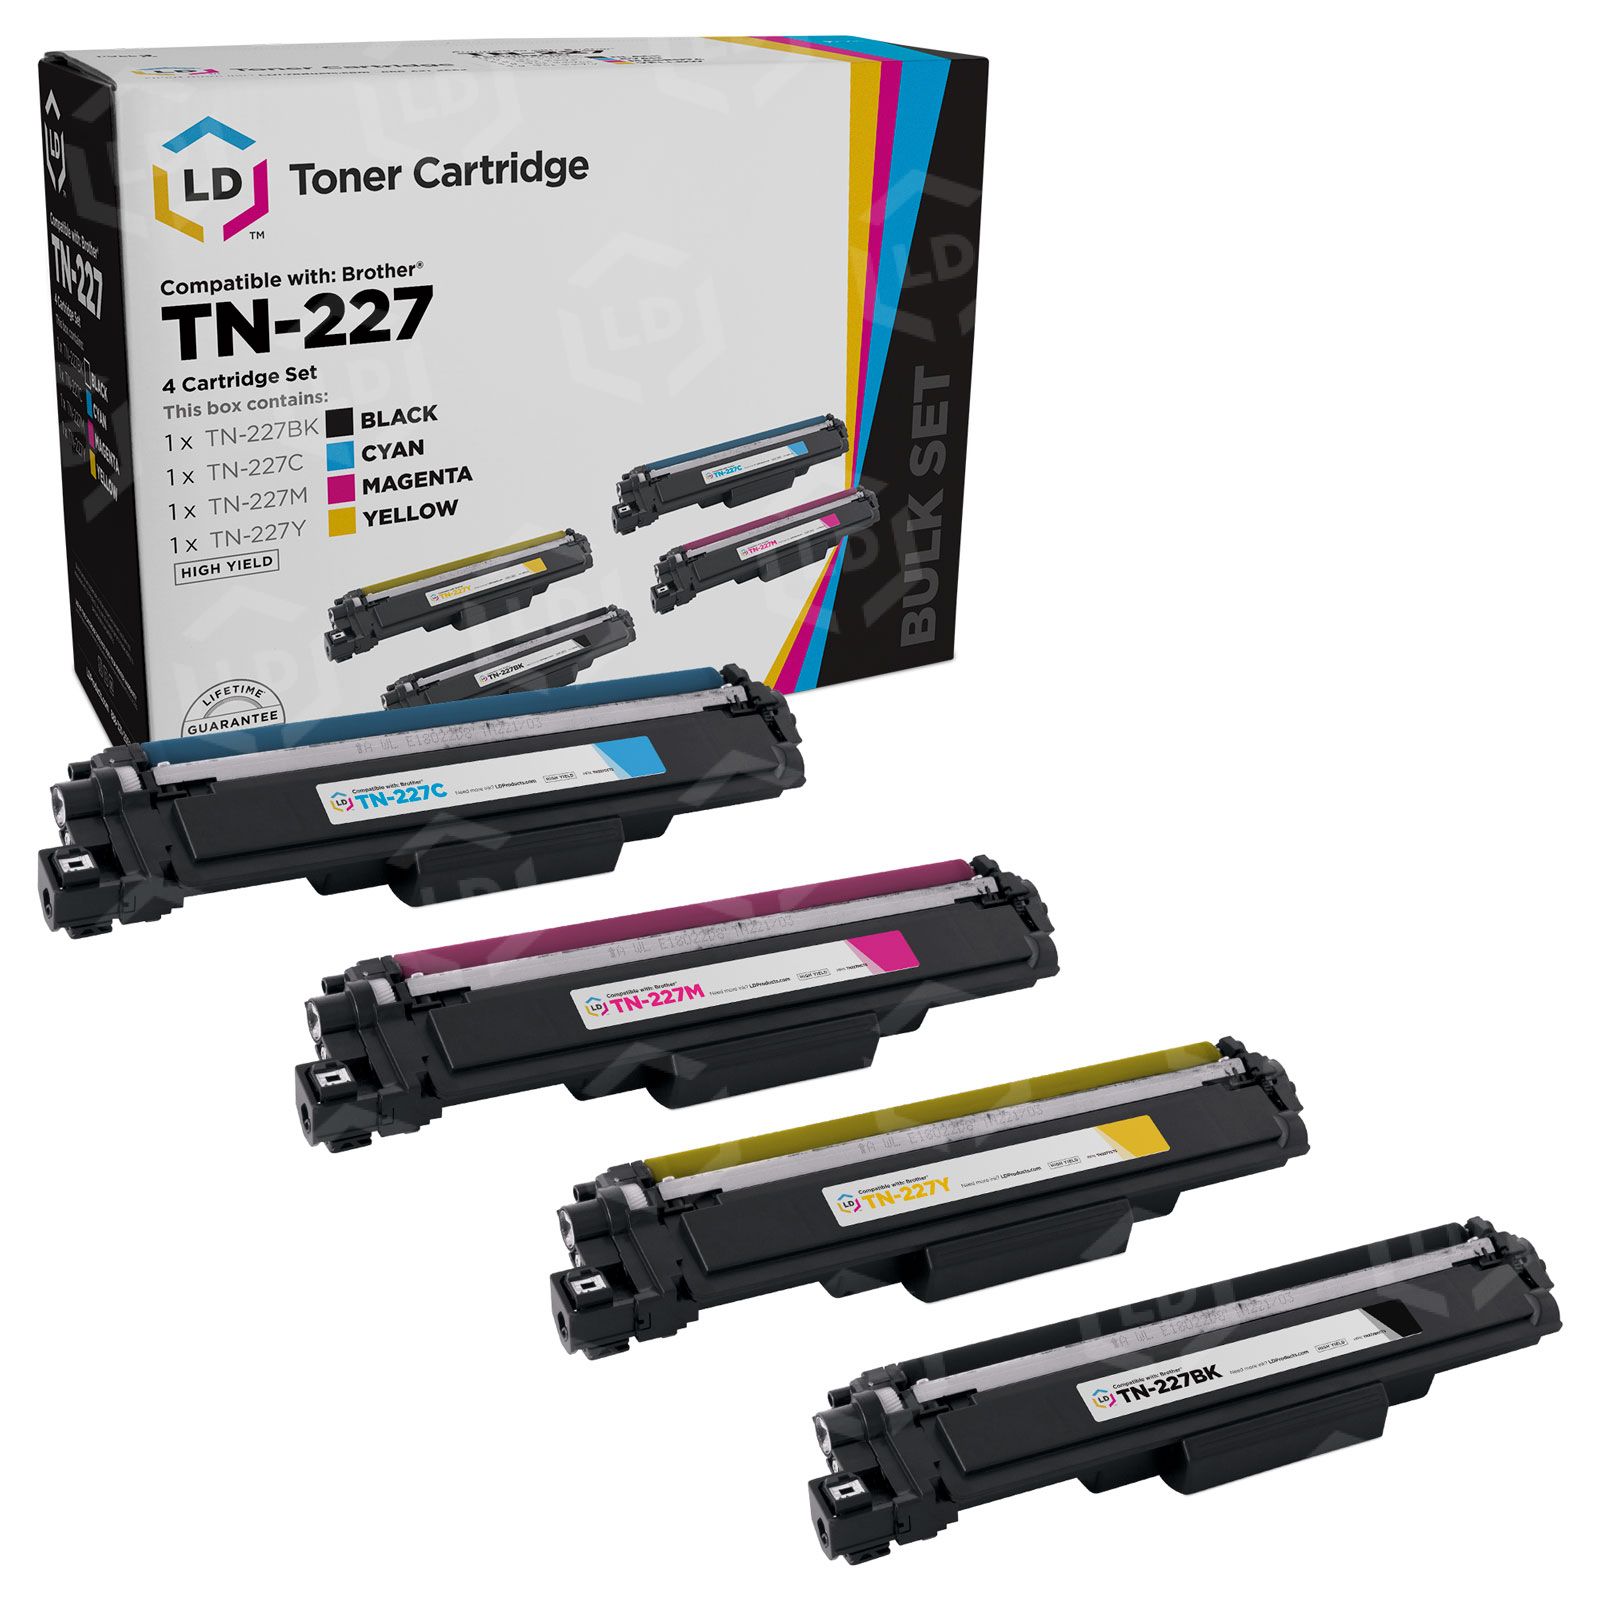 Toner Bank TN227 Toner Cartridge Compatible with CHIP - Black/Cyan